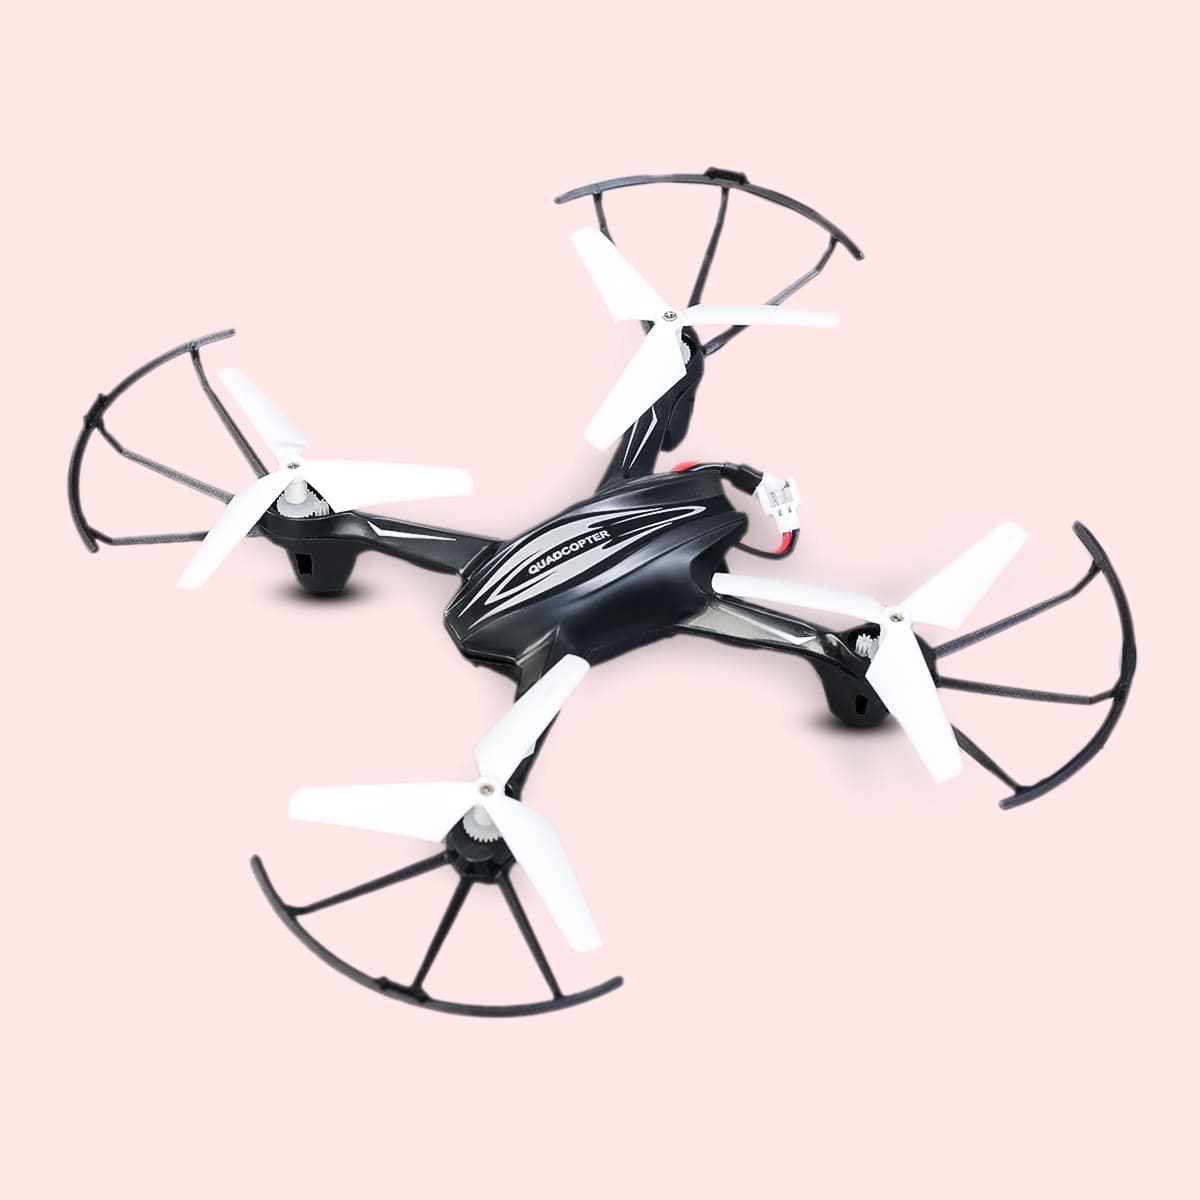 HX-750 Small Lightweight Drone